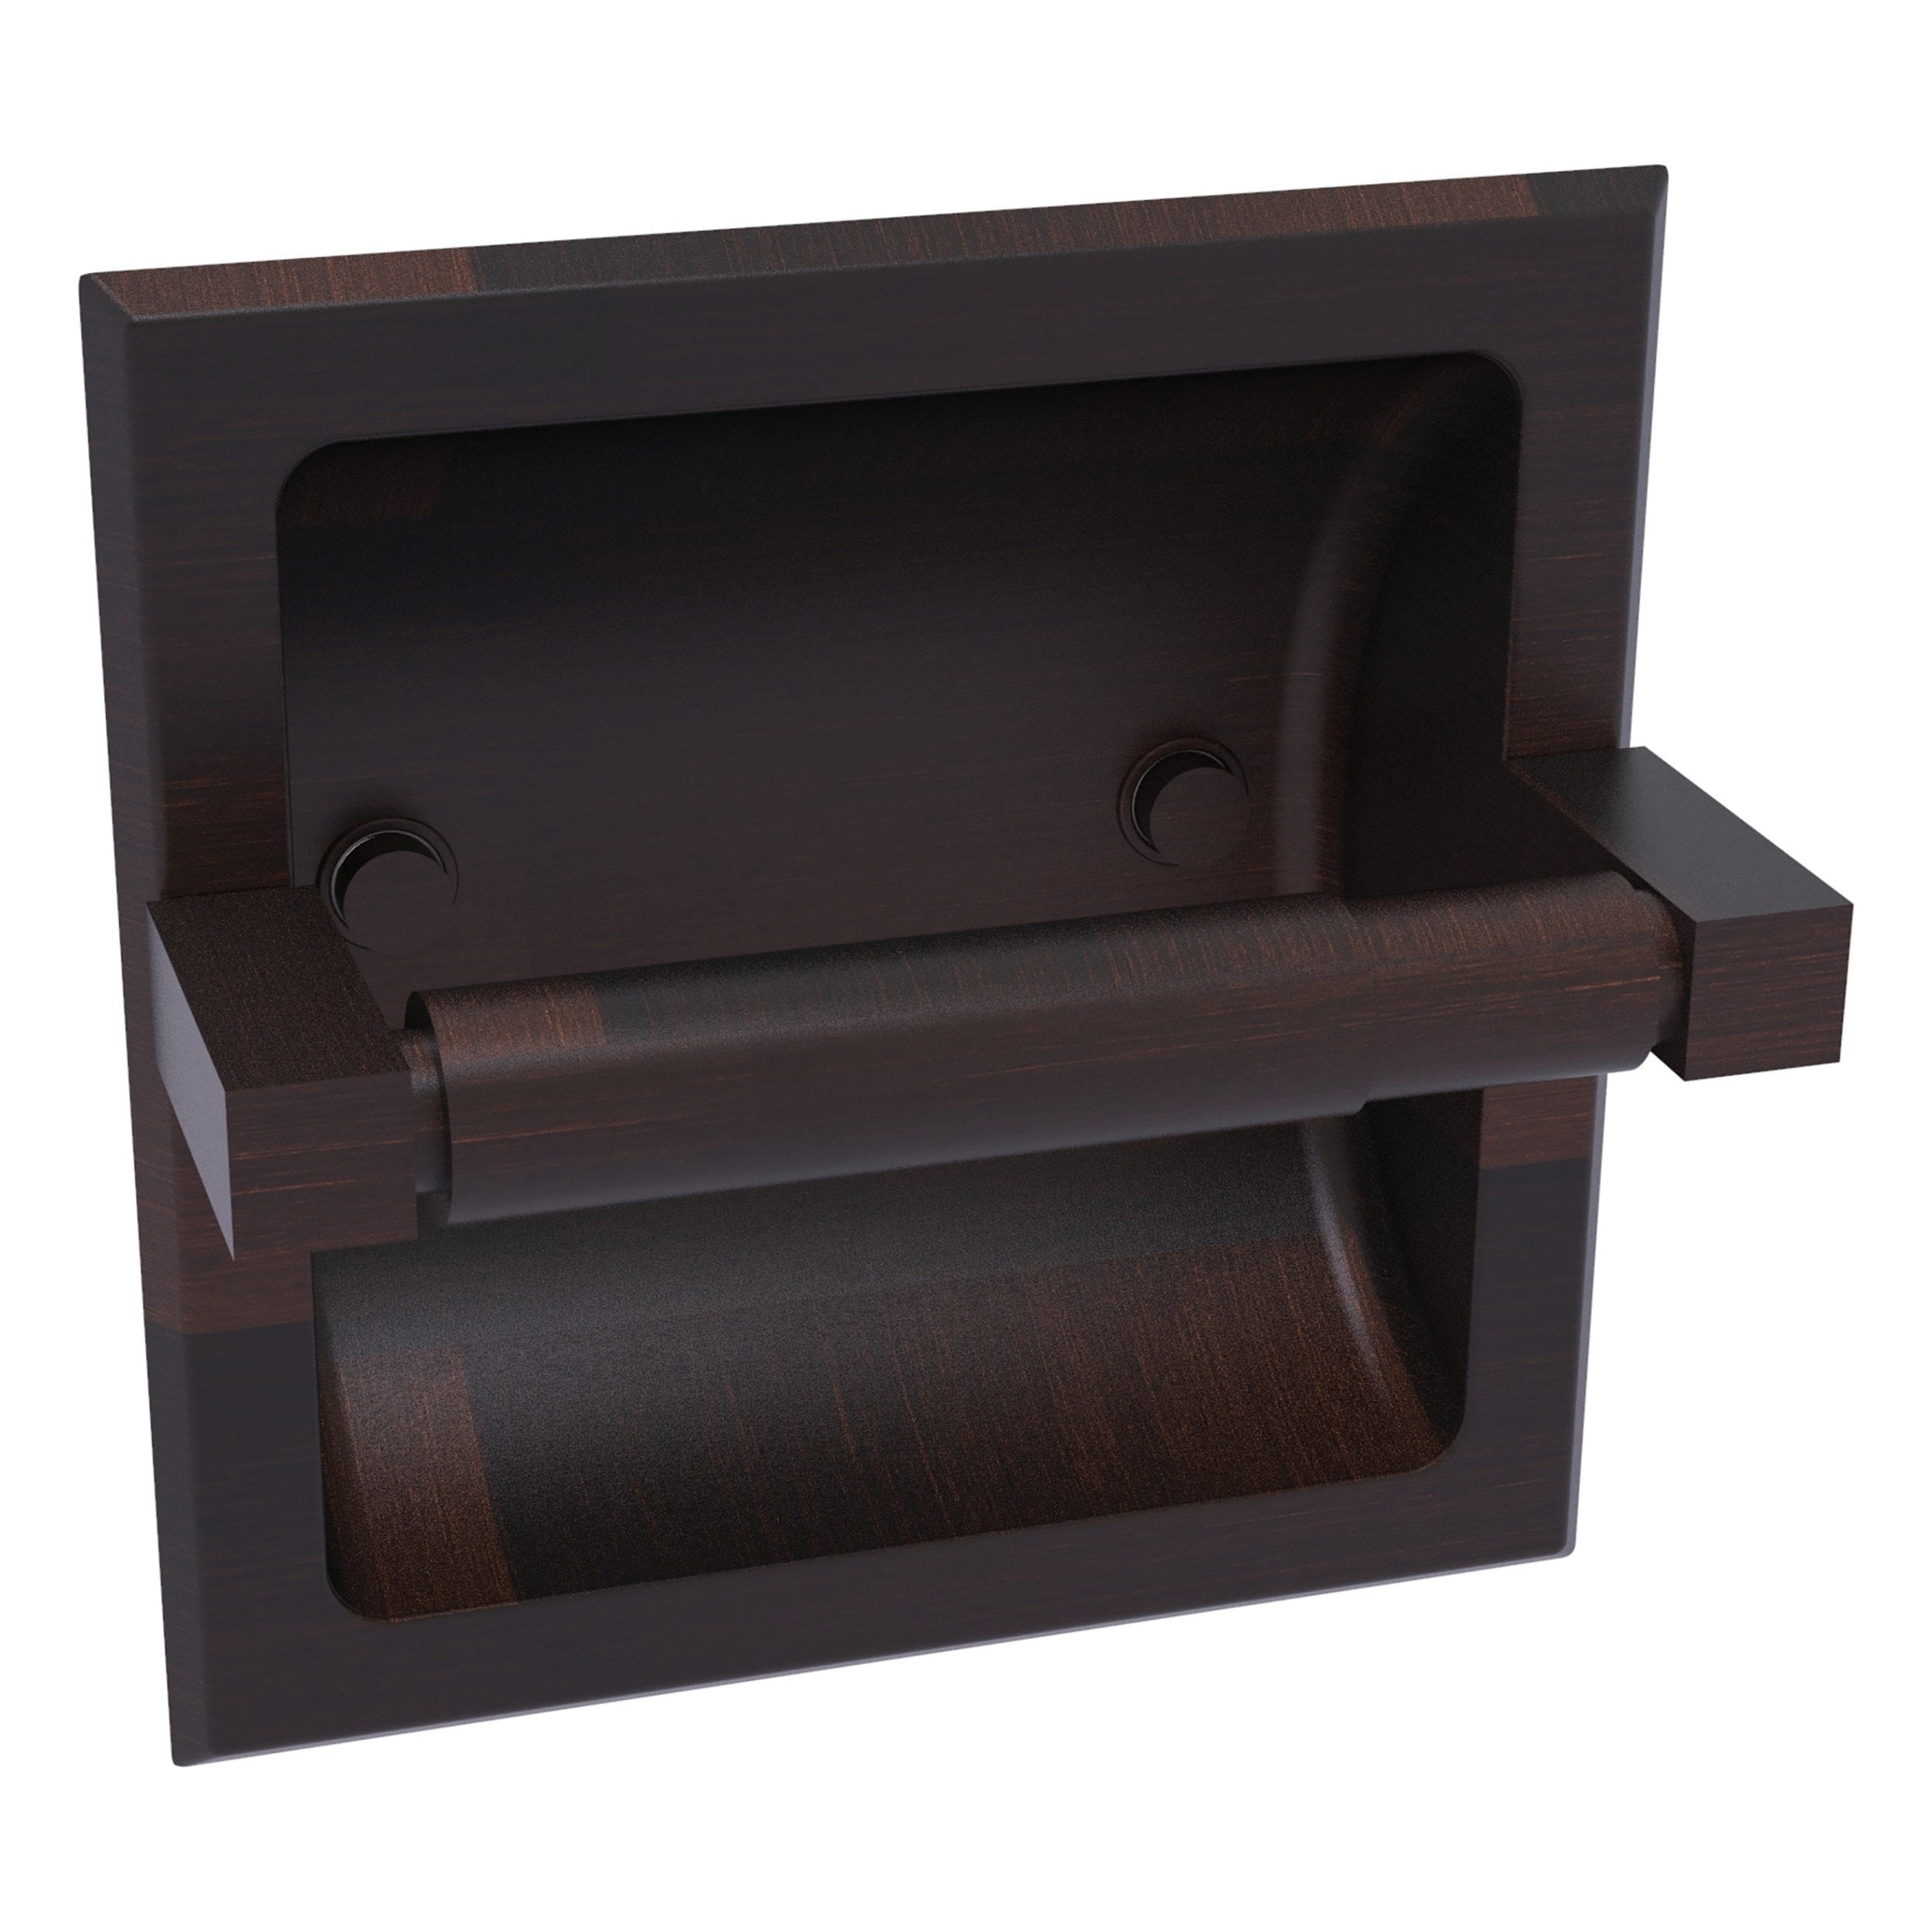 Allied Brass Montero Collection Recessed Toilet Paper Holder - Satin Chrome